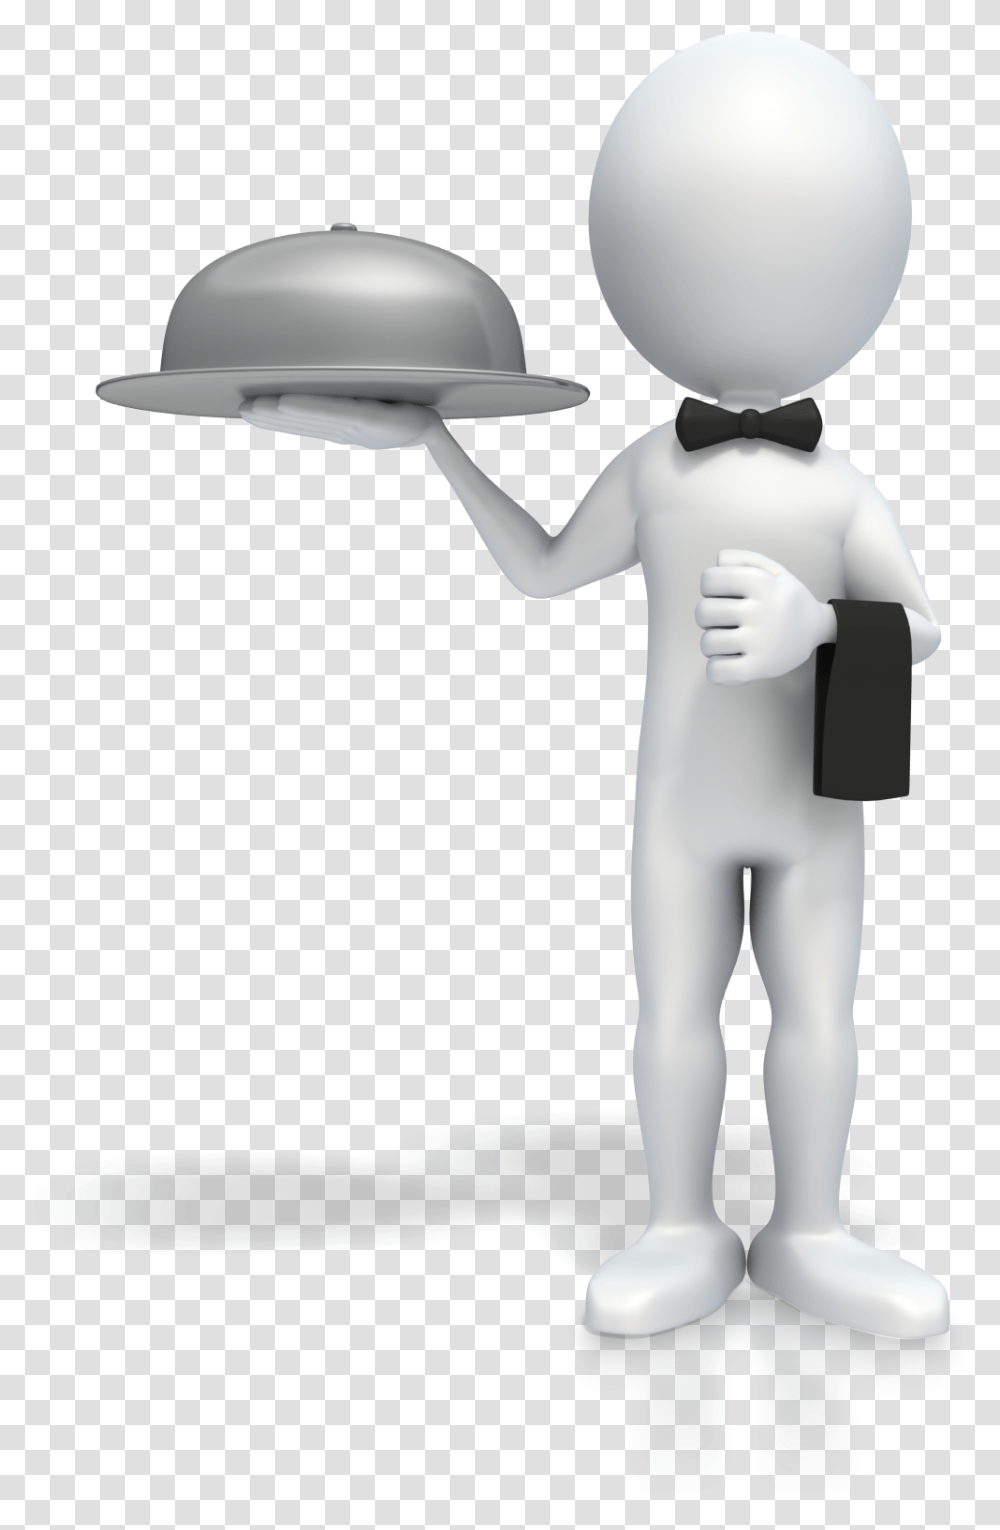 Stick Figure Waiter 1600 Clr 3d Human Stick Figures Servant Stick Figures, Apparel, Hardhat, Helmet Transparent Png